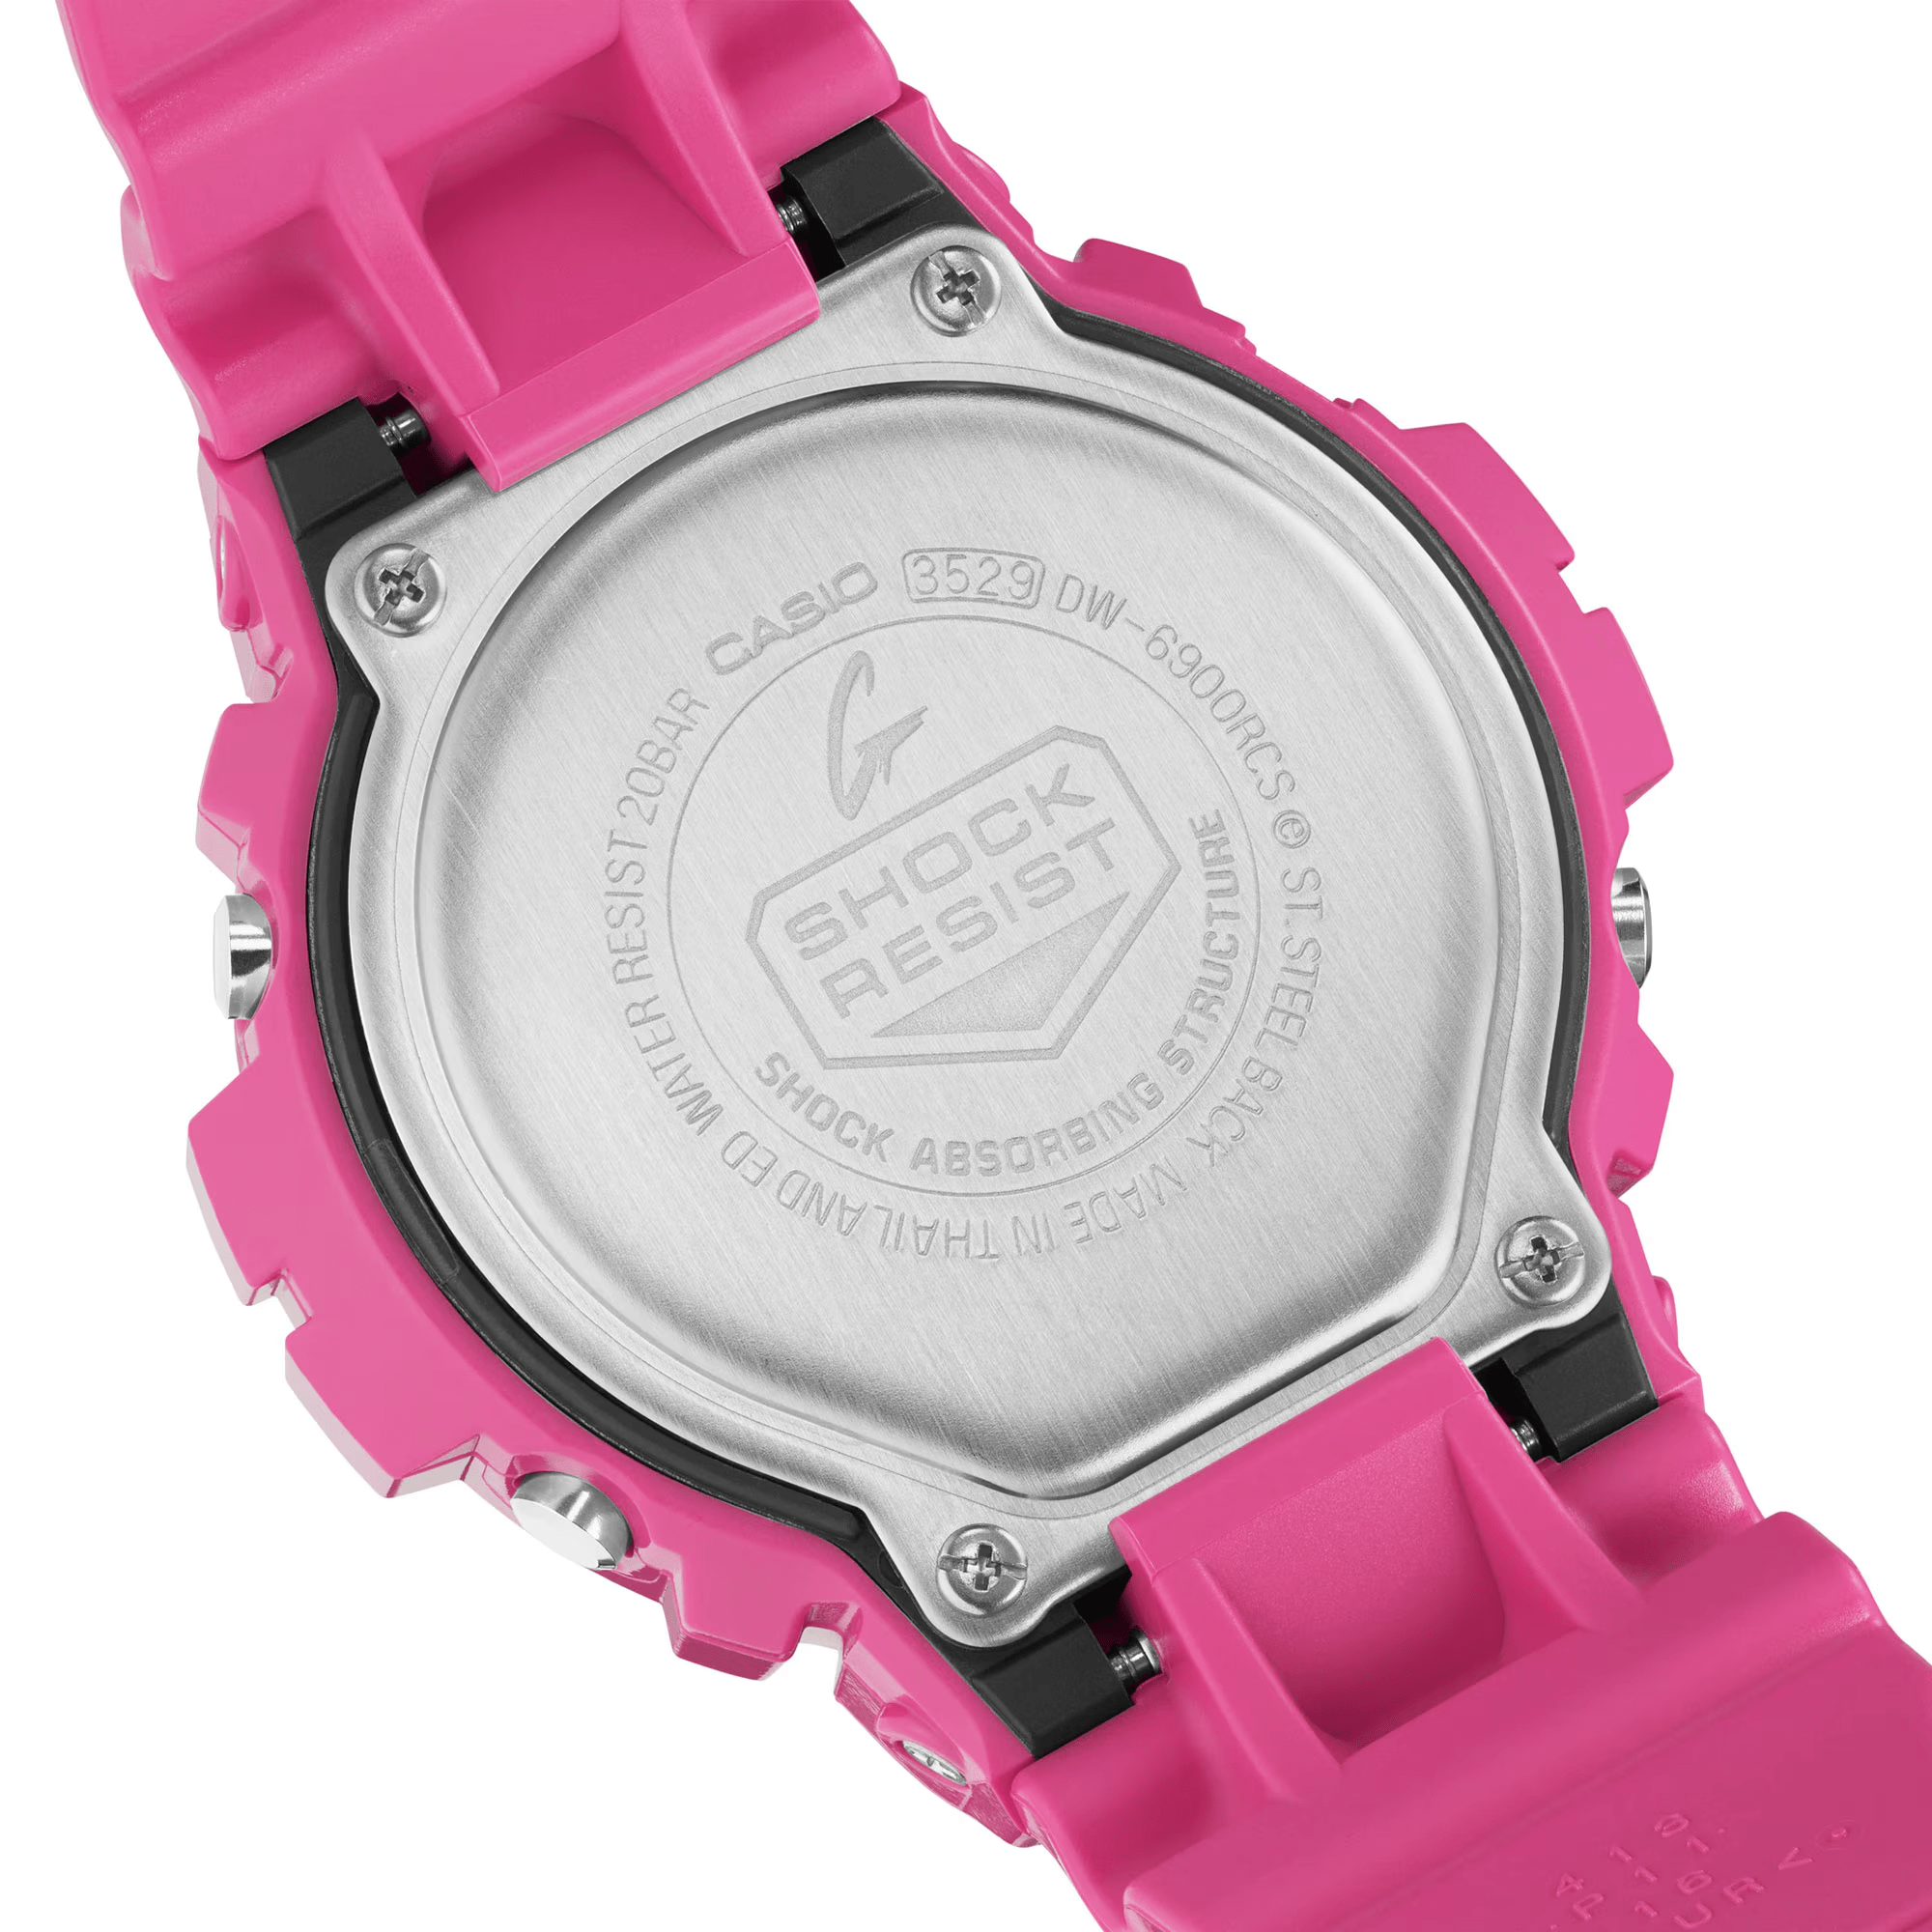 G-Shock Digital Pink Women's Watch DW6900RCS-4